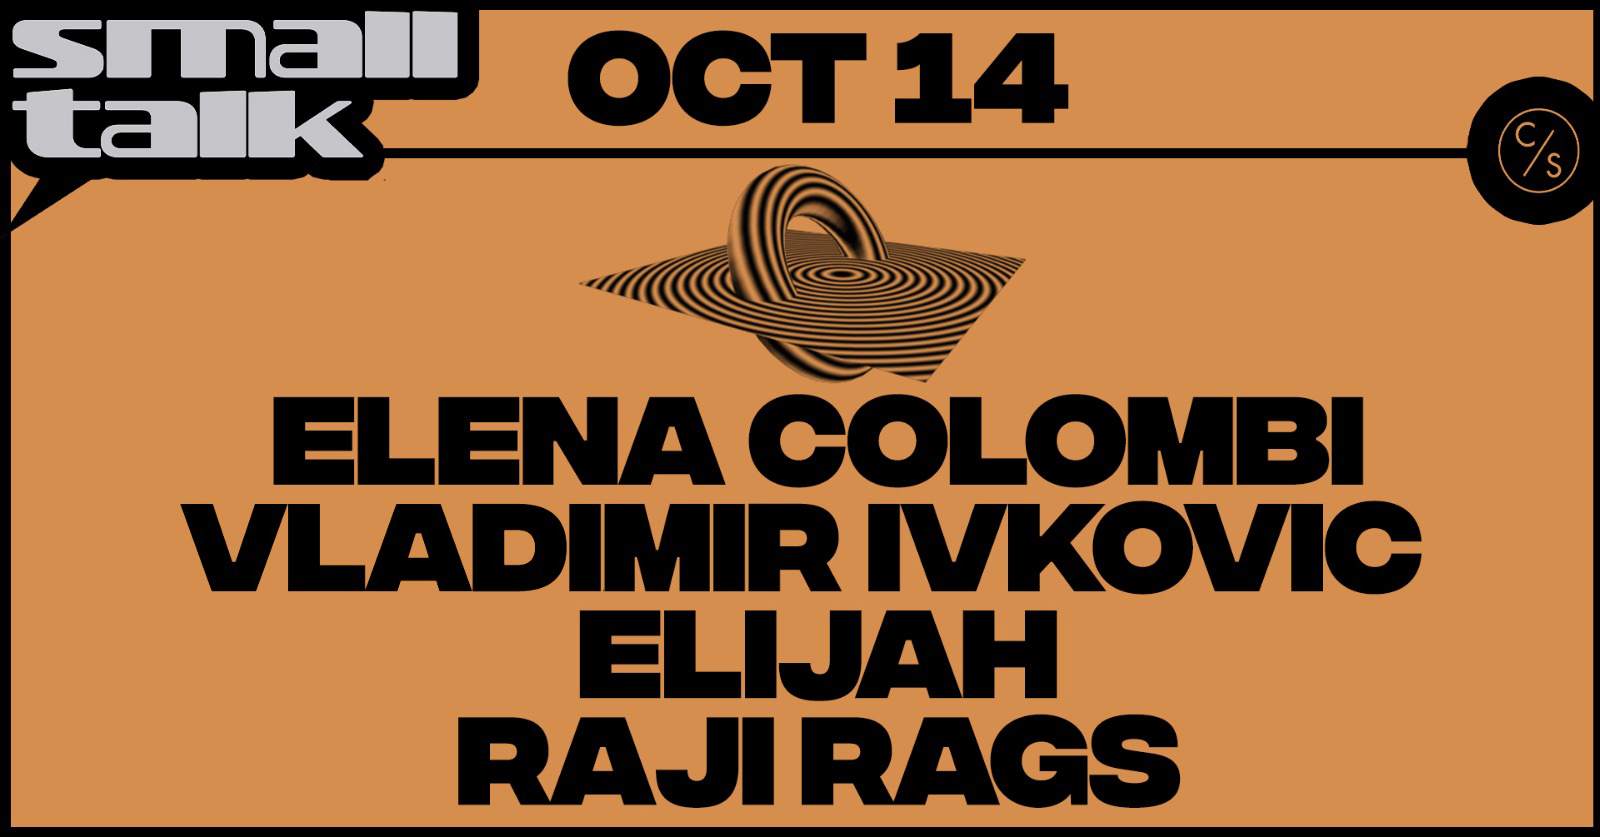 Small Talk with Vladimir Ivkovic, Elena Colombi, Elijah, Raji Rags - Flyer front